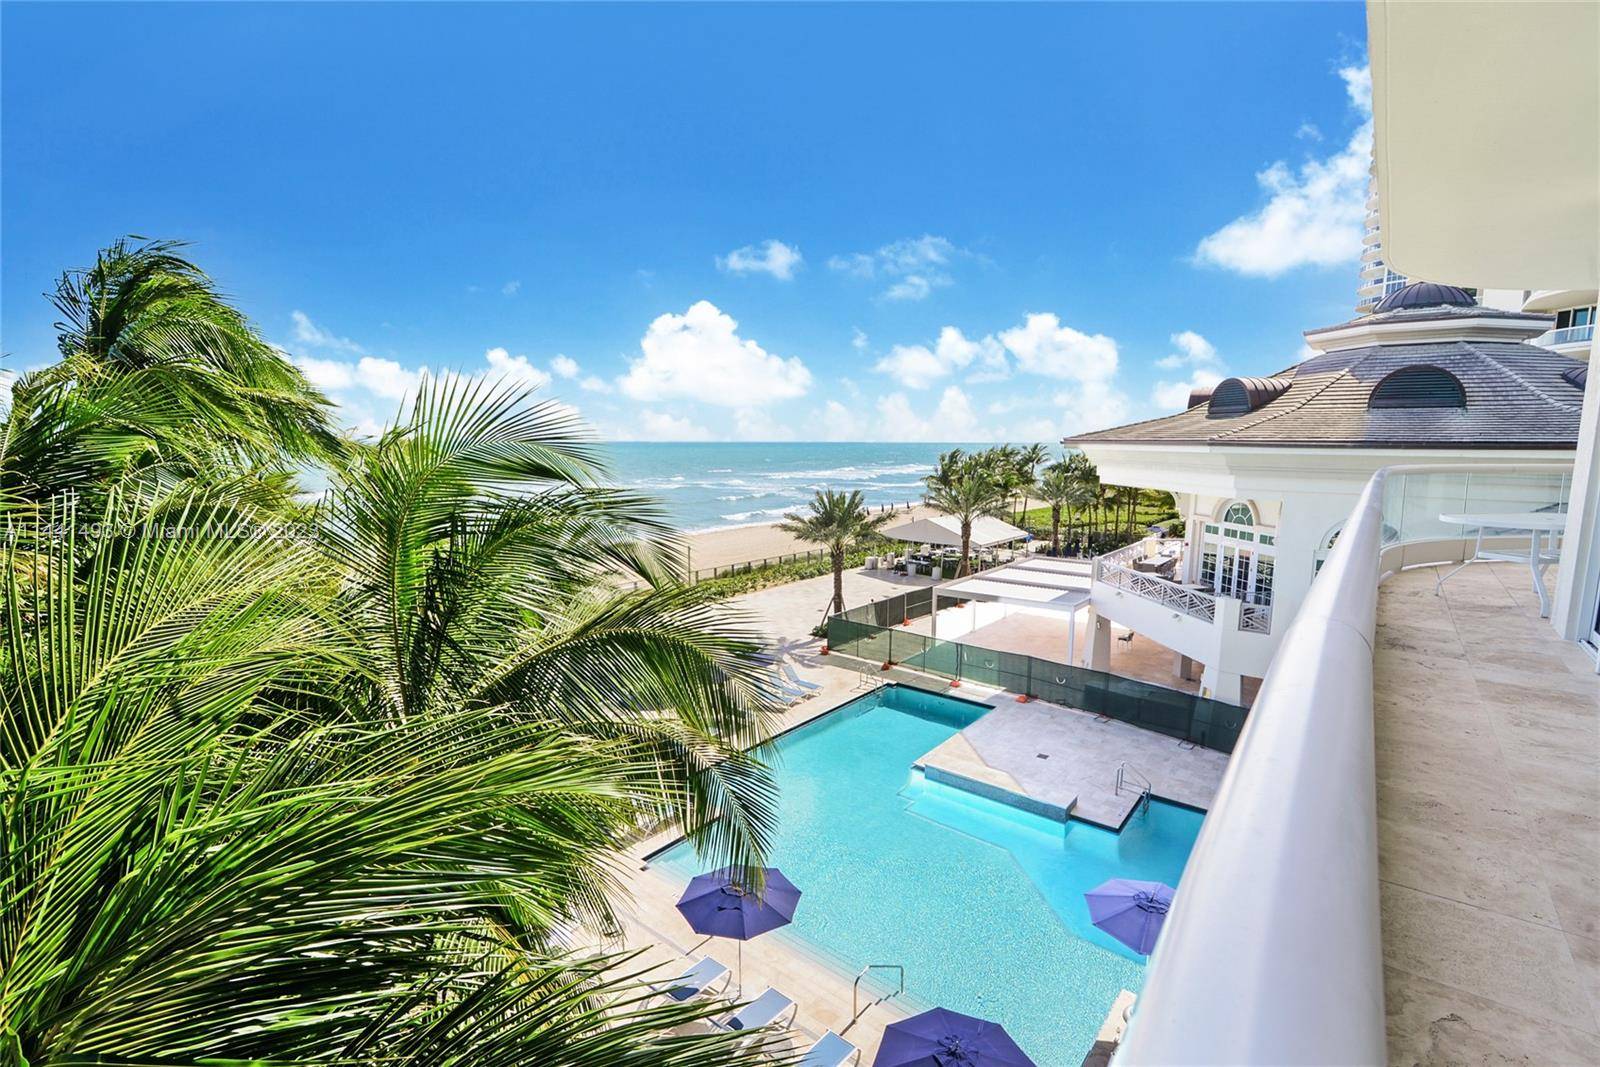 Beautiful apartment ocean front, in the most luxury condominium in Sunny Isles Beach, FL Turnberry Ocean Colony.